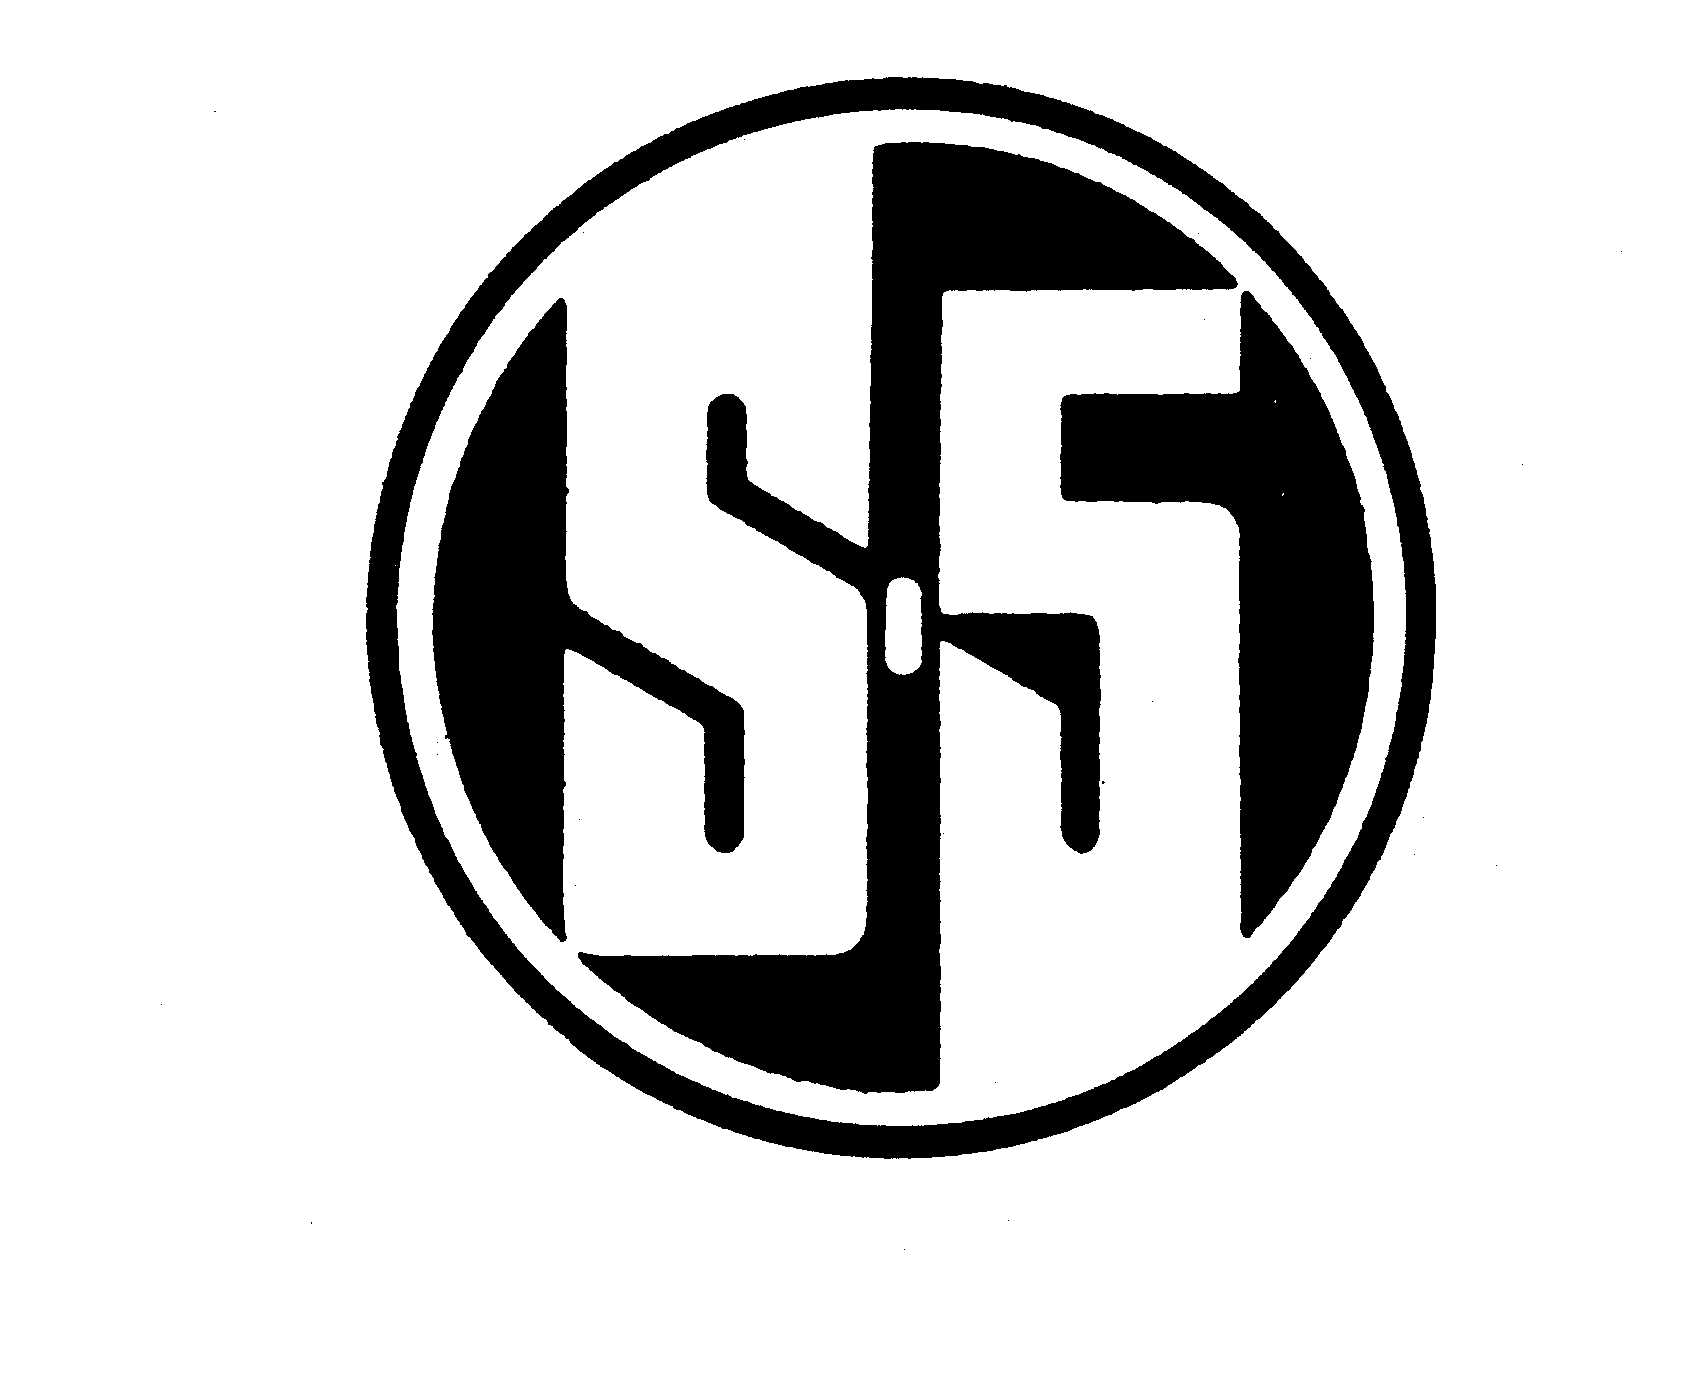 Trademark Logo S-5